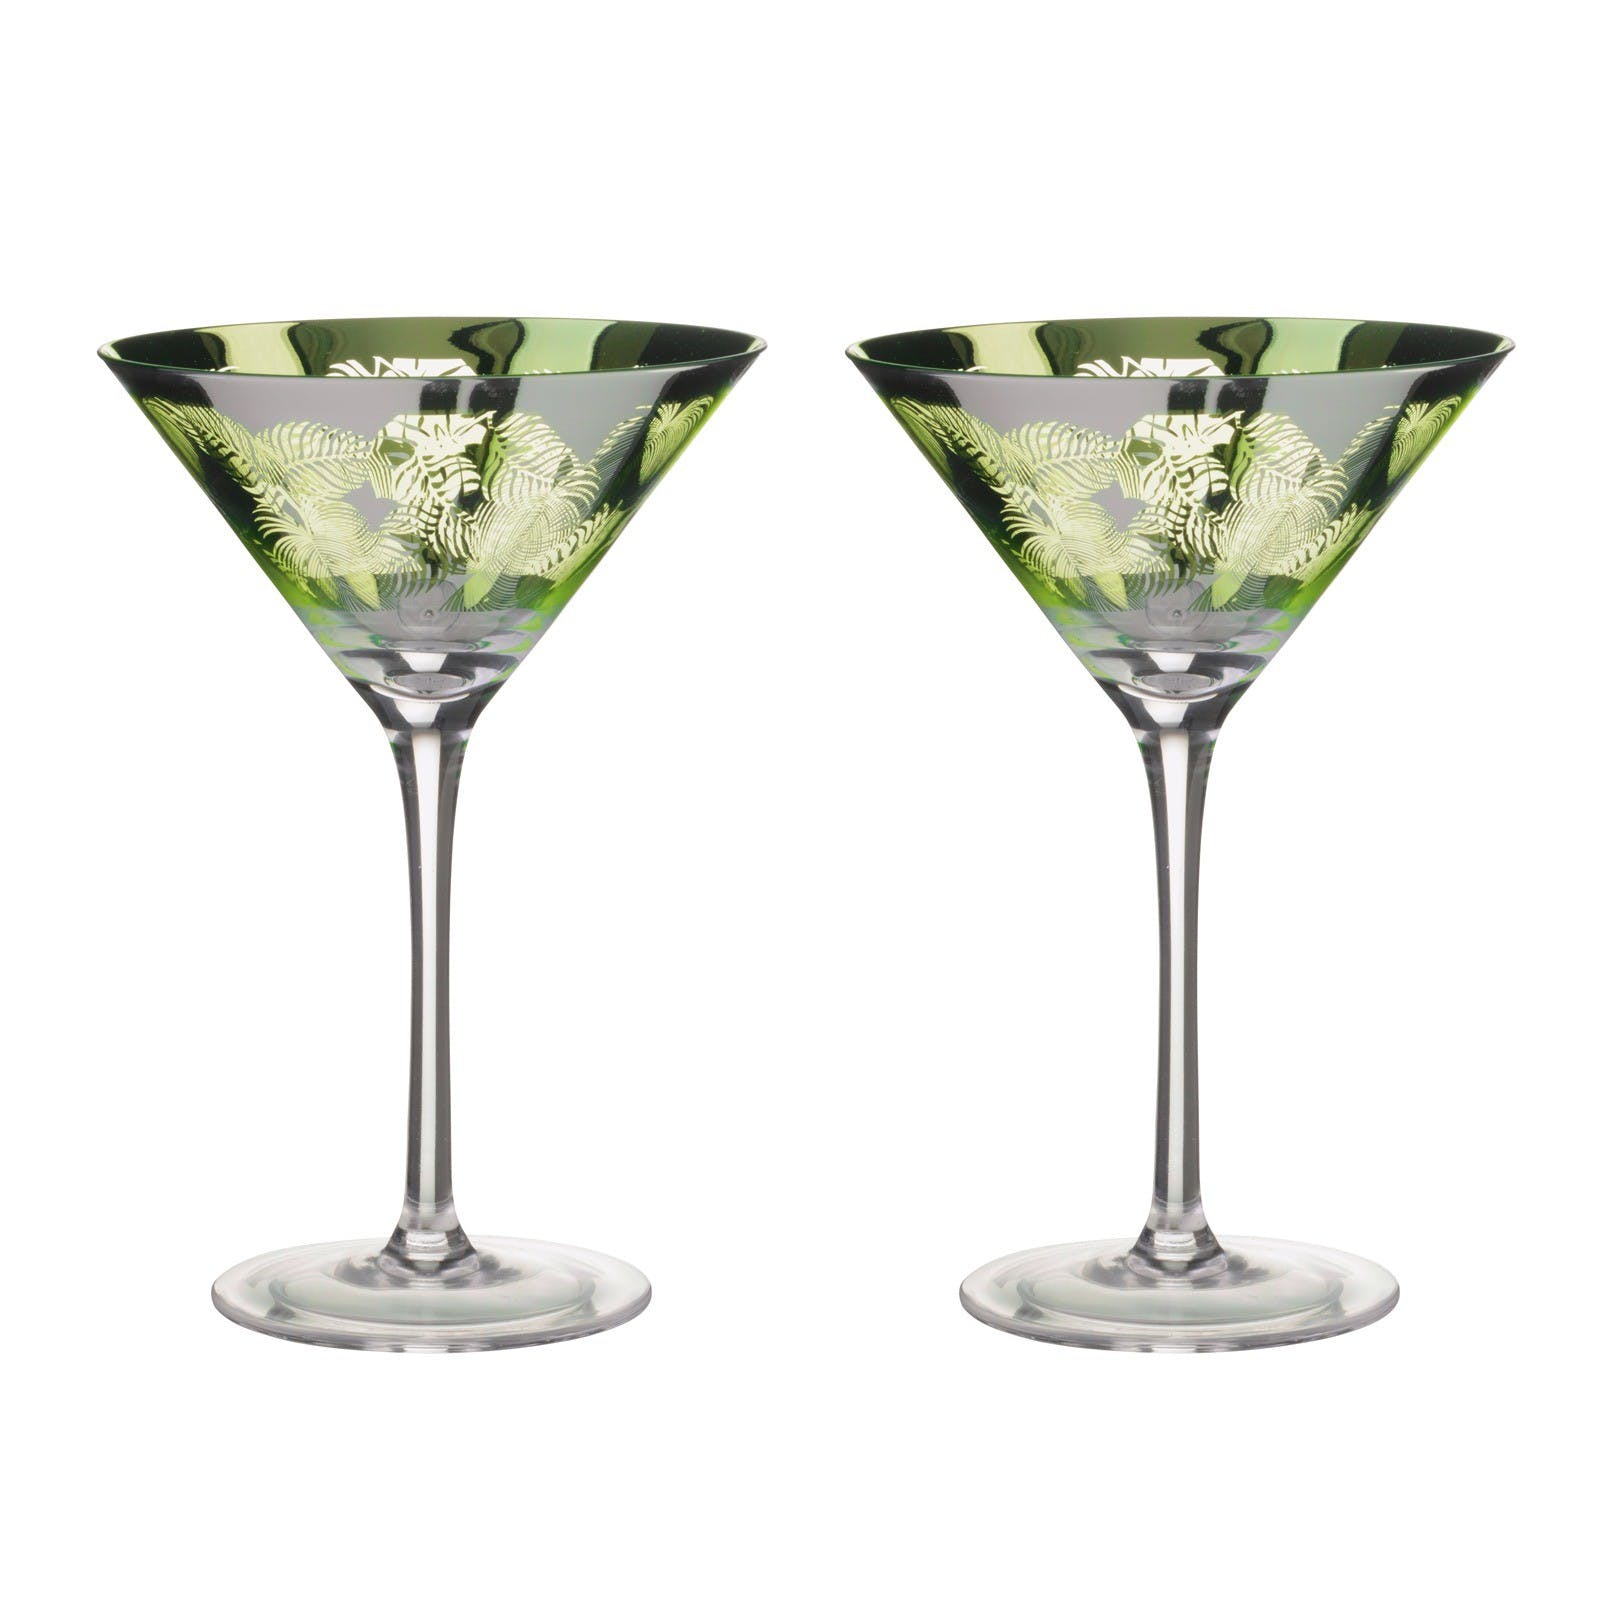 Pair of Tropical cocktail glasses - Natalia Willmott